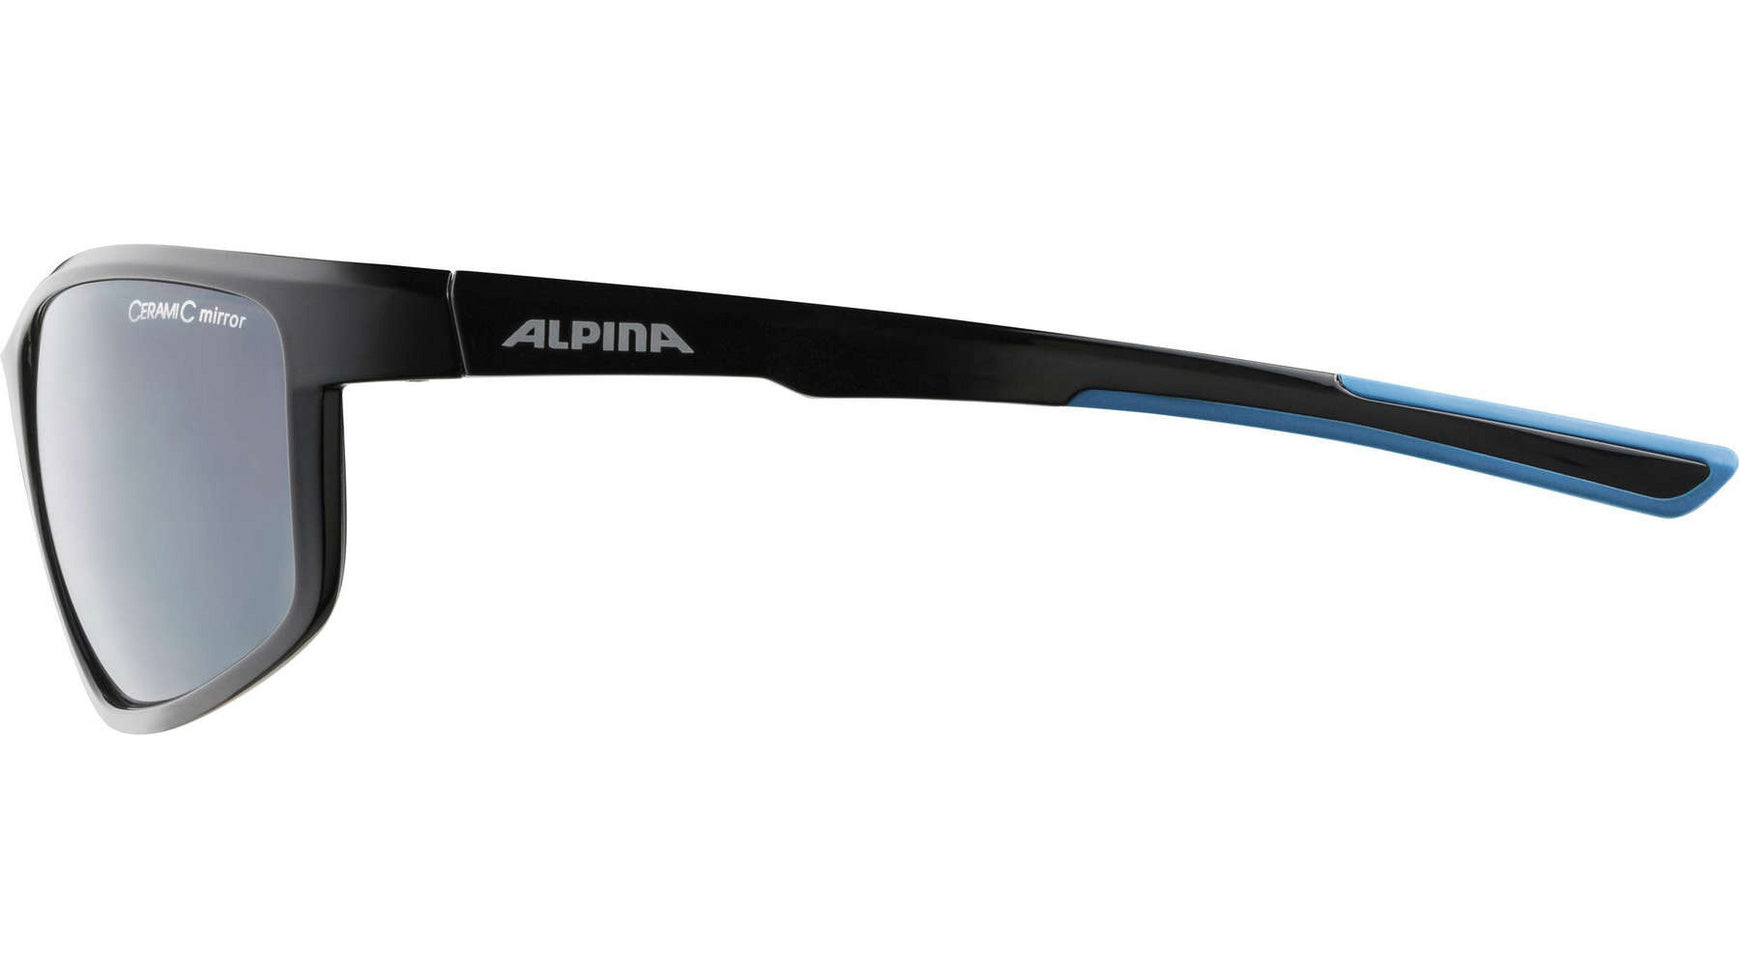 Alpina Defey Fahrradbrille image 4